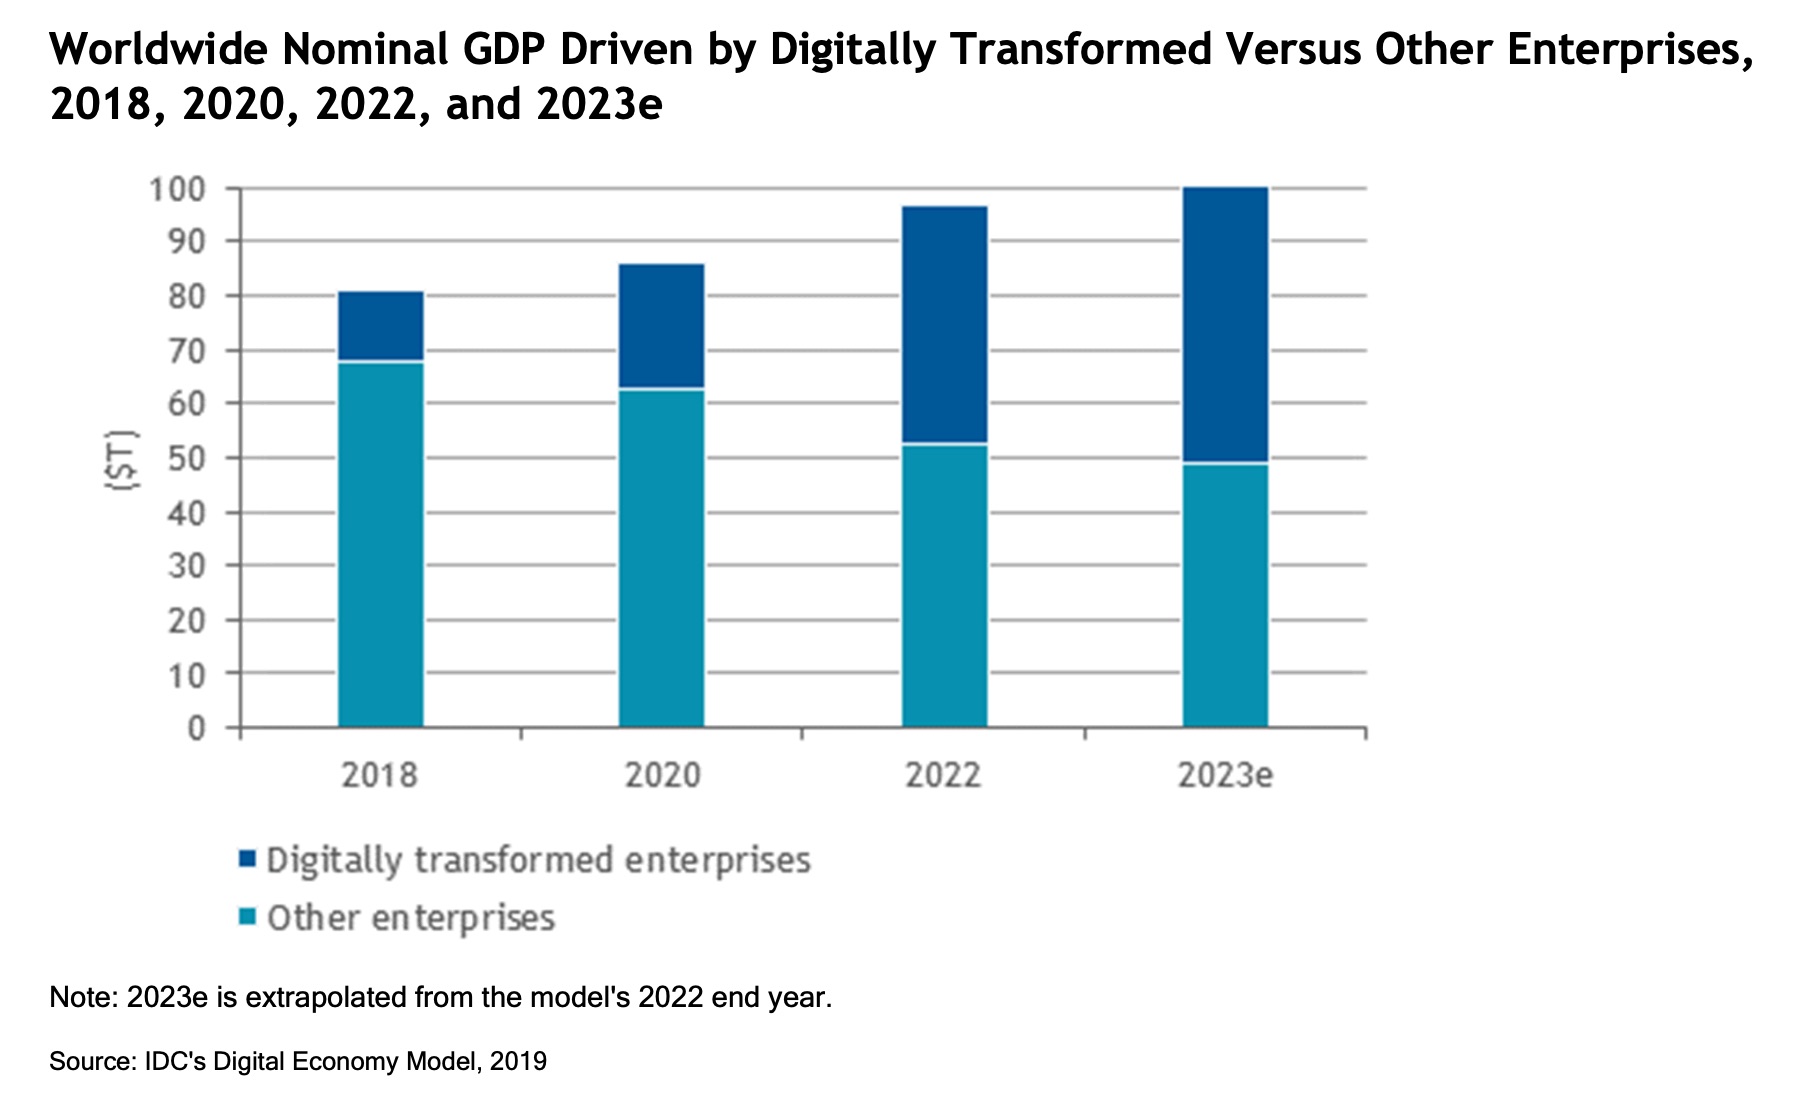 Digitally Transformed Companies Contribution to Worldwide GDP